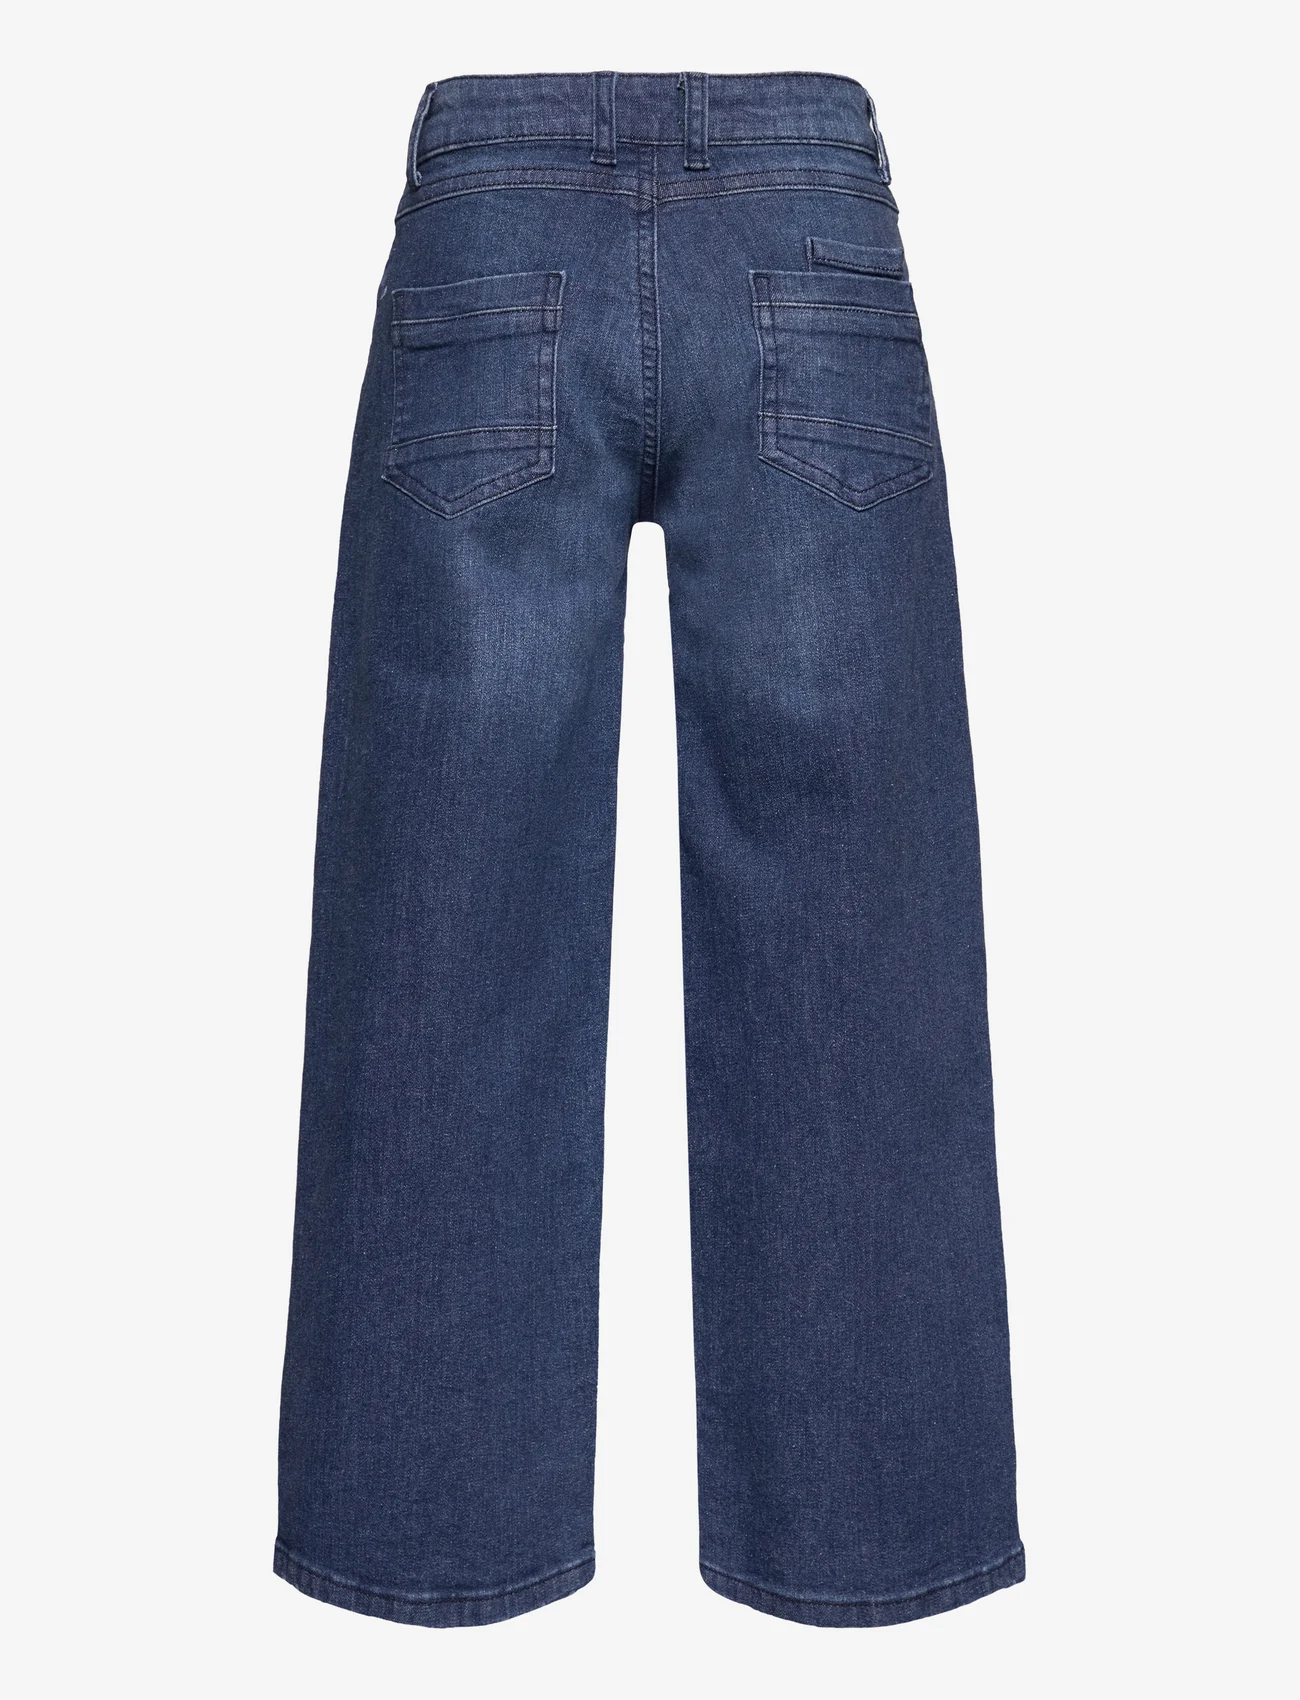 Creamie - Jeans Wide - vida jeans - blue denim - 1